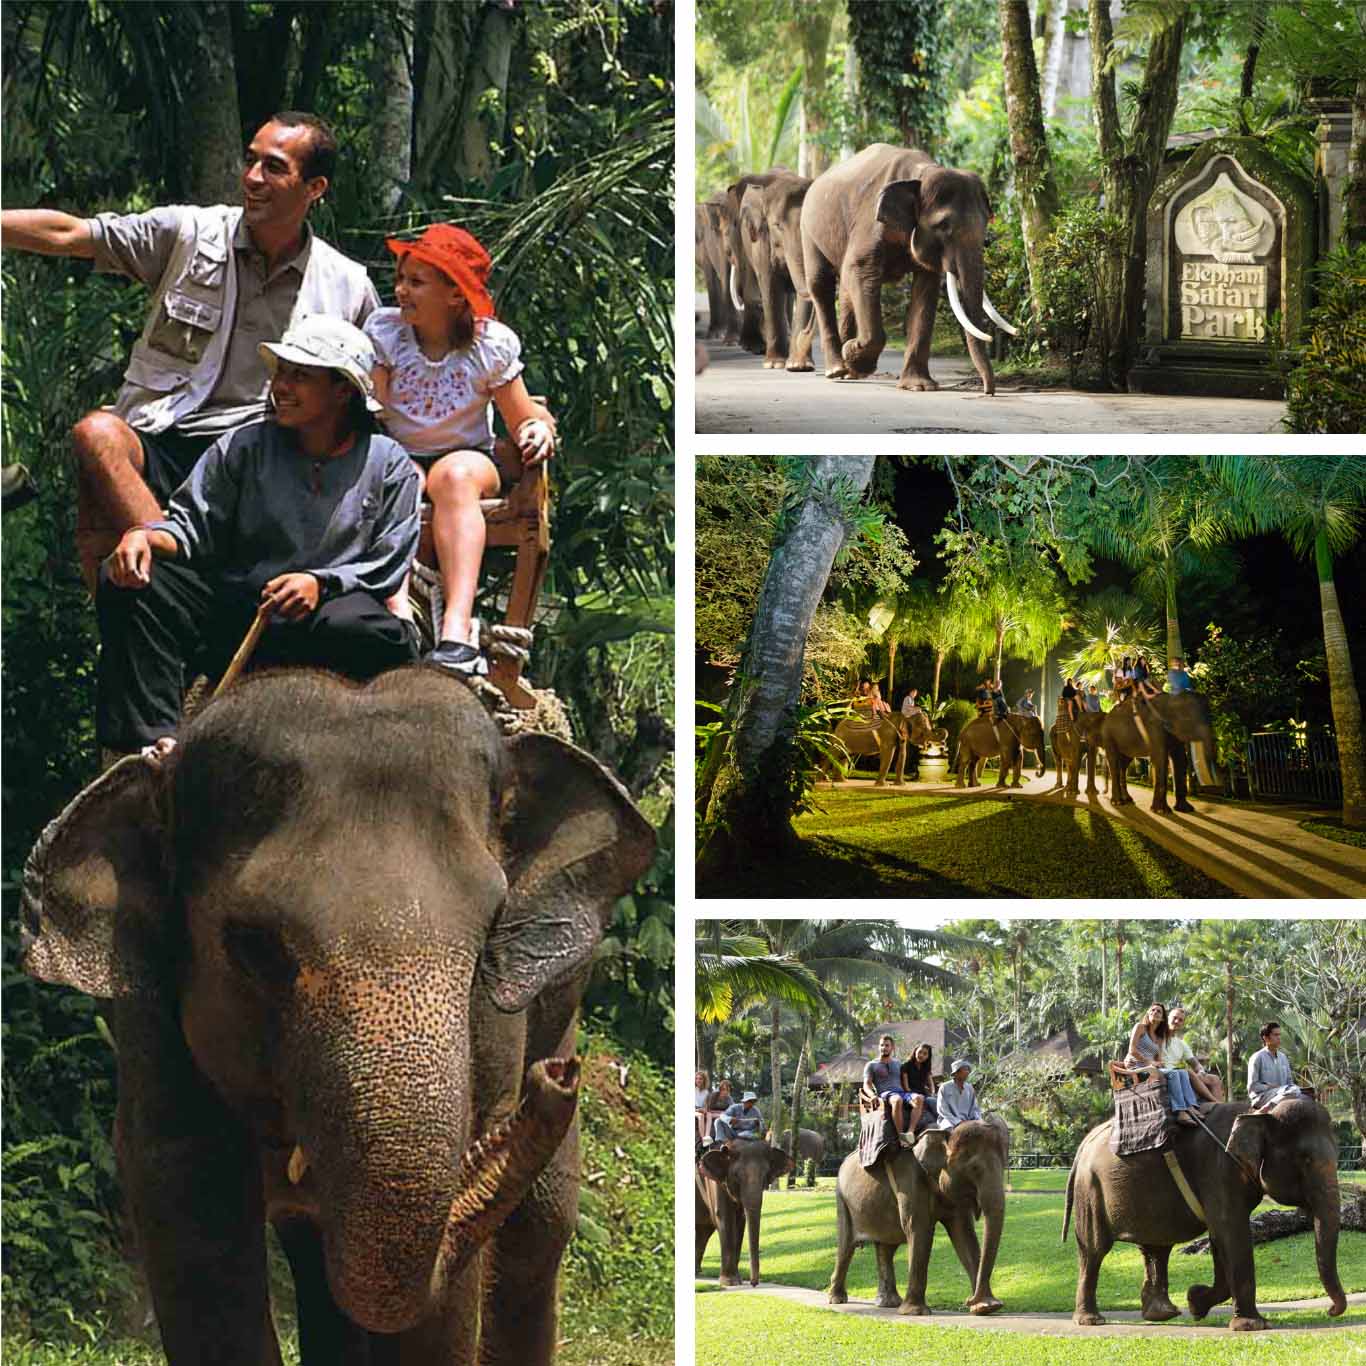 Elephant Safari Park - Bali's Wild Side - Animal Attractions